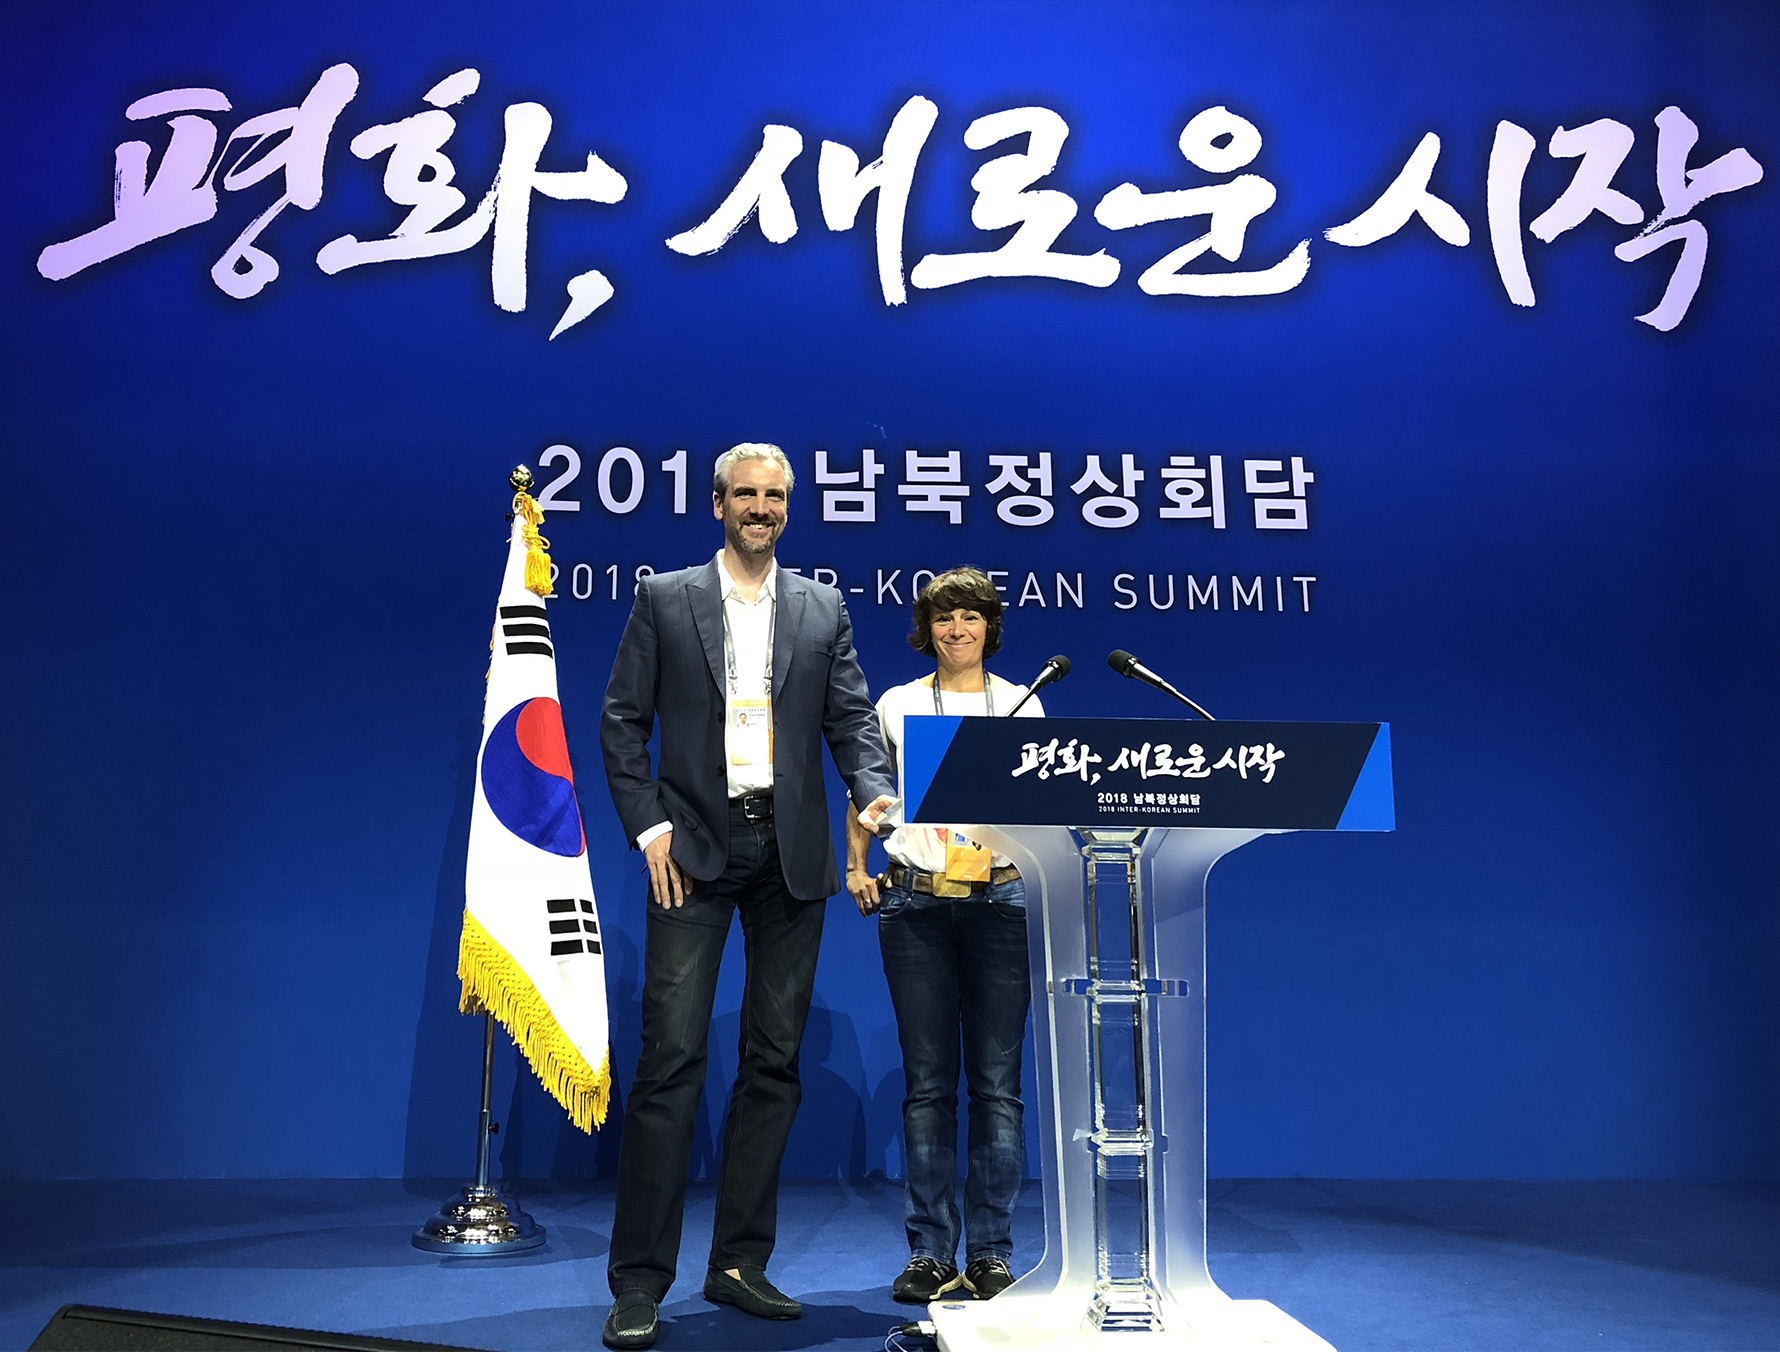 Korea-Consult: Bringing Continents Together